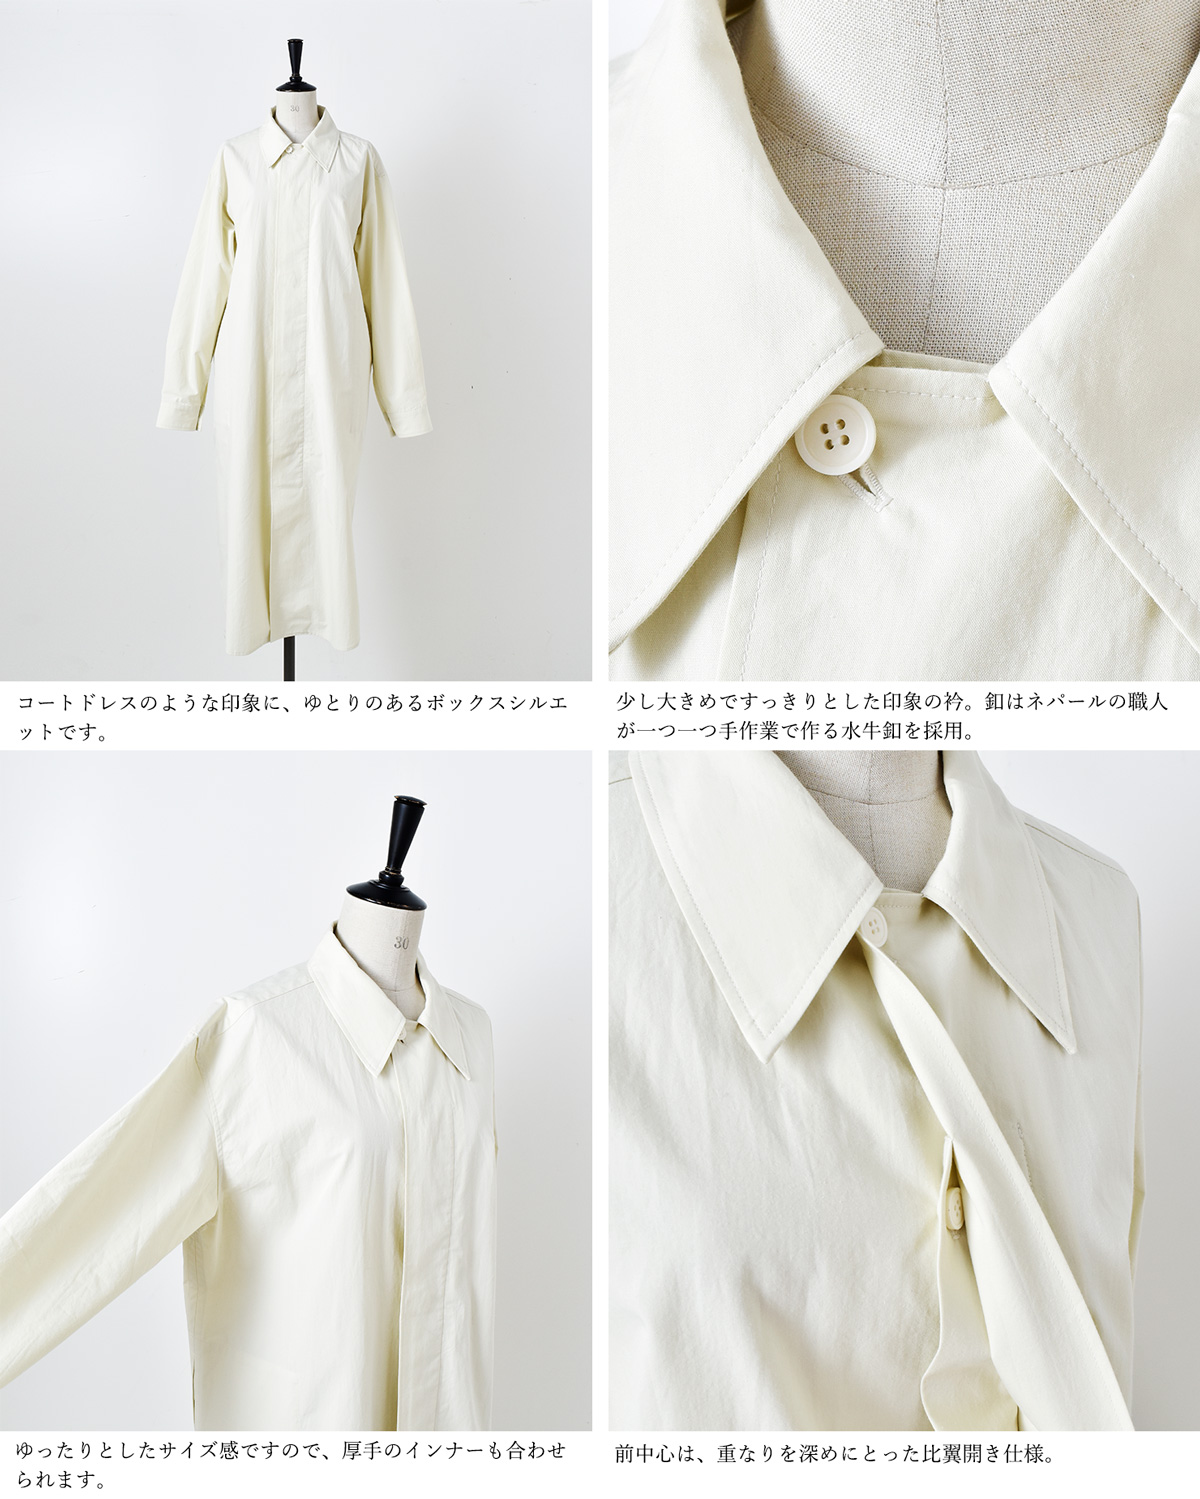 THE HINOKI(ザ ヒノキ)オーガニックコットンポプリンシャツドレス th21s-21